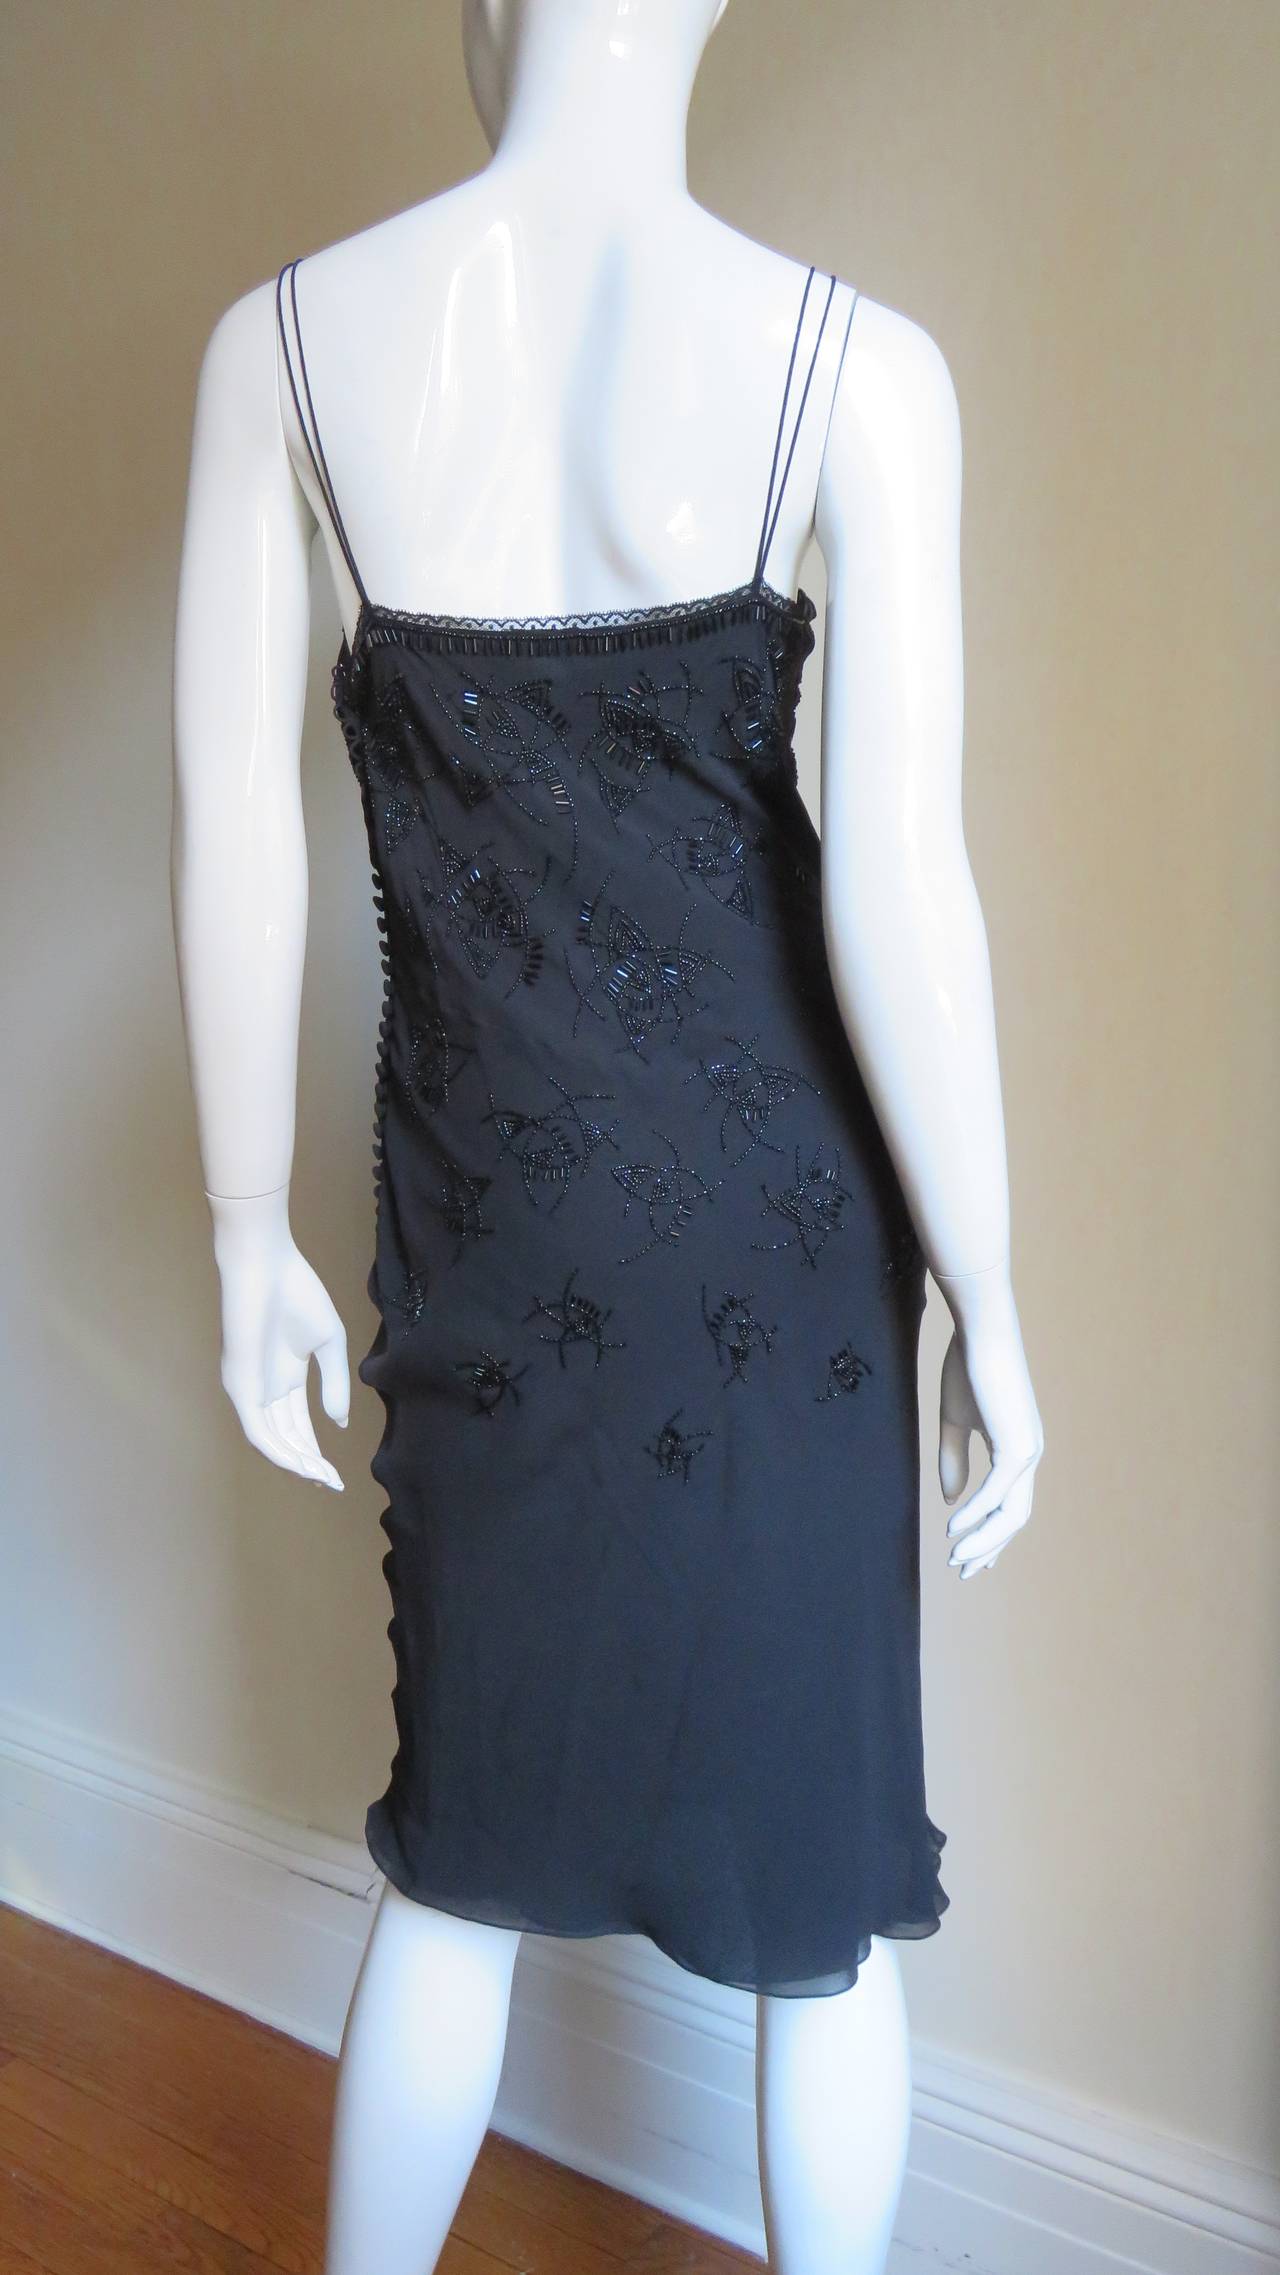 Christian Dior Beaded Slip Dress For Sale at 1stdibs